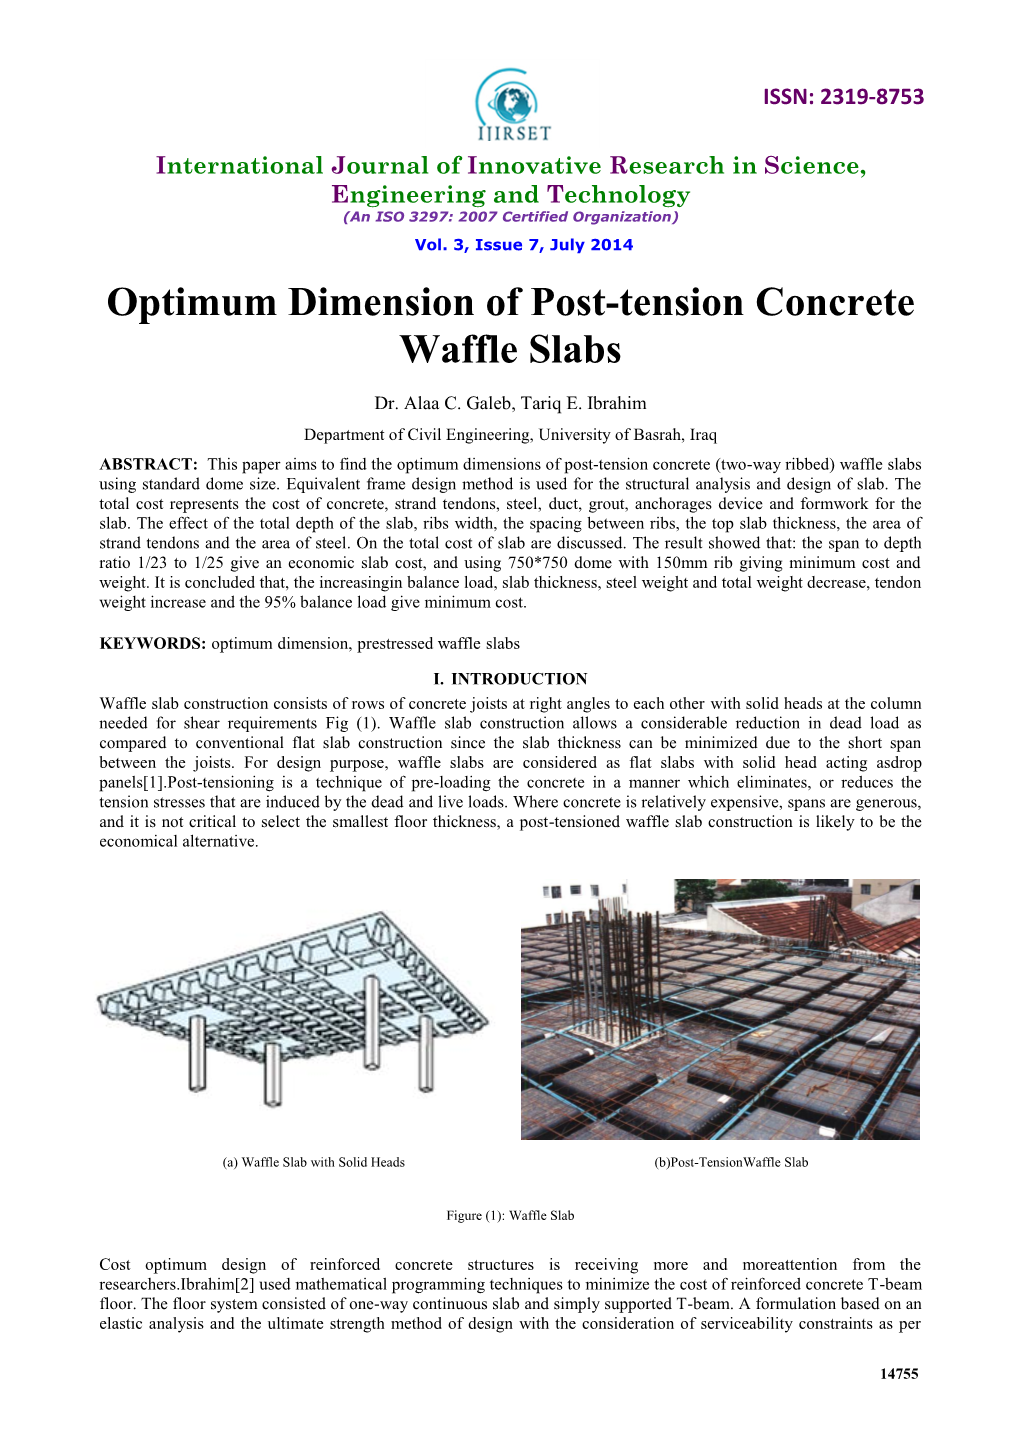 Optimum Dimension of Post-Tension Concrete Waffle Slabs